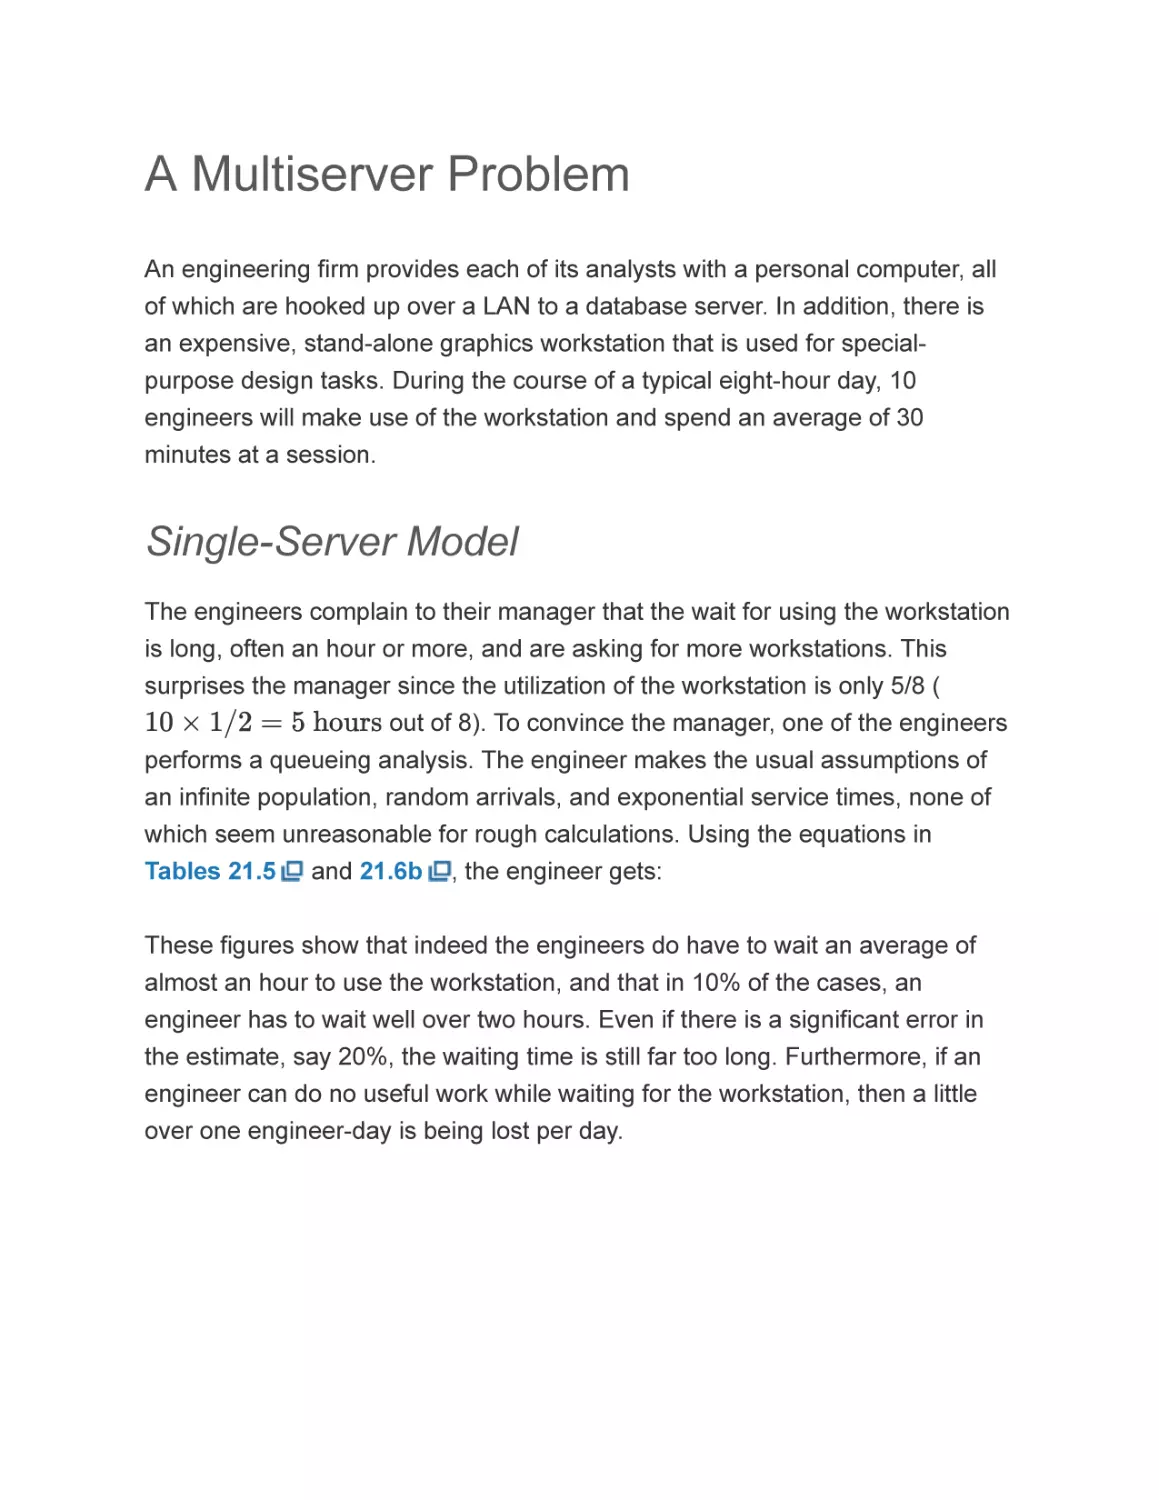 A Multiserver Problem
Single-Server Model